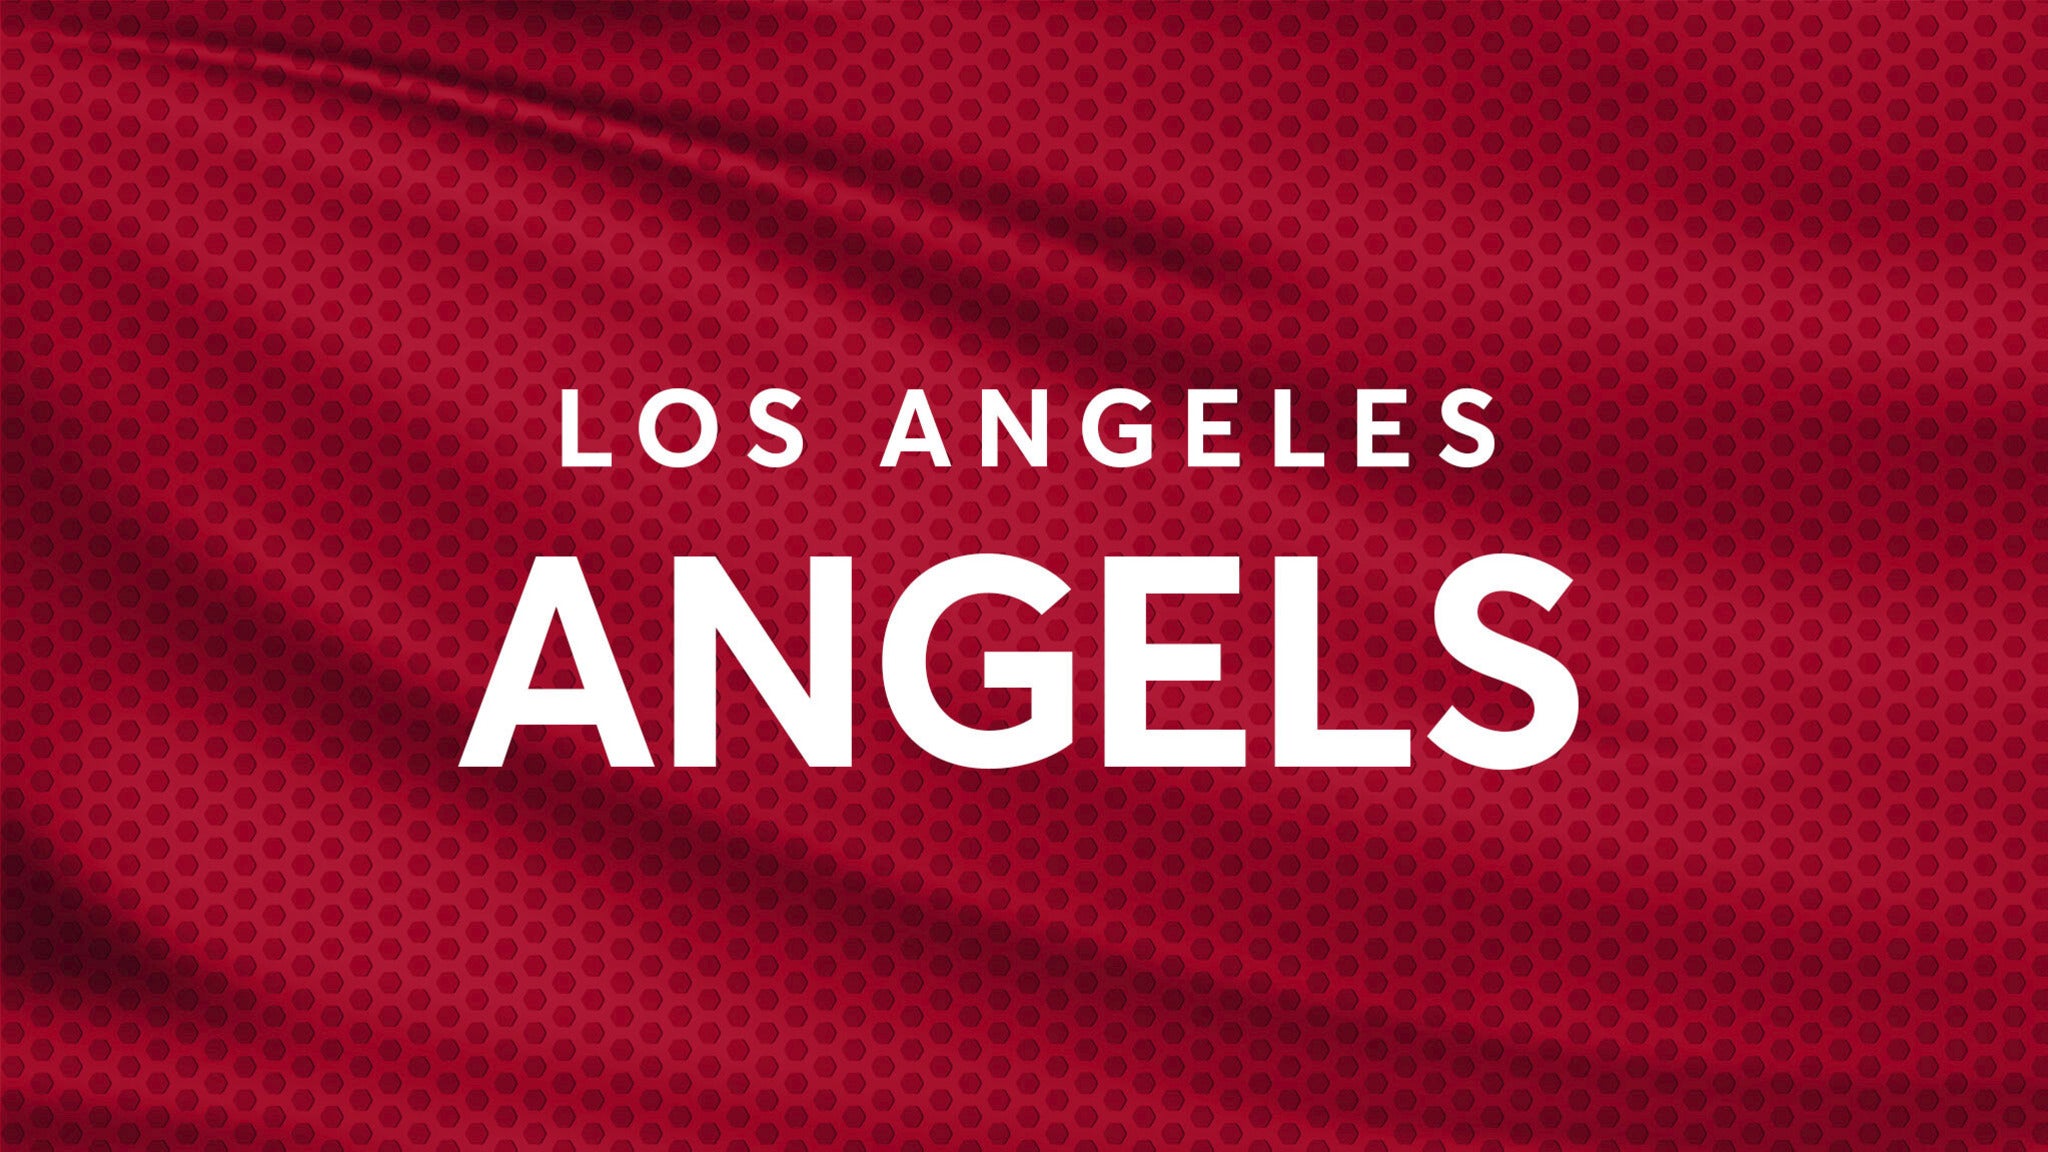 Los Angeles Angels vs. Oakland Athletics - Anaheim, CA 92806